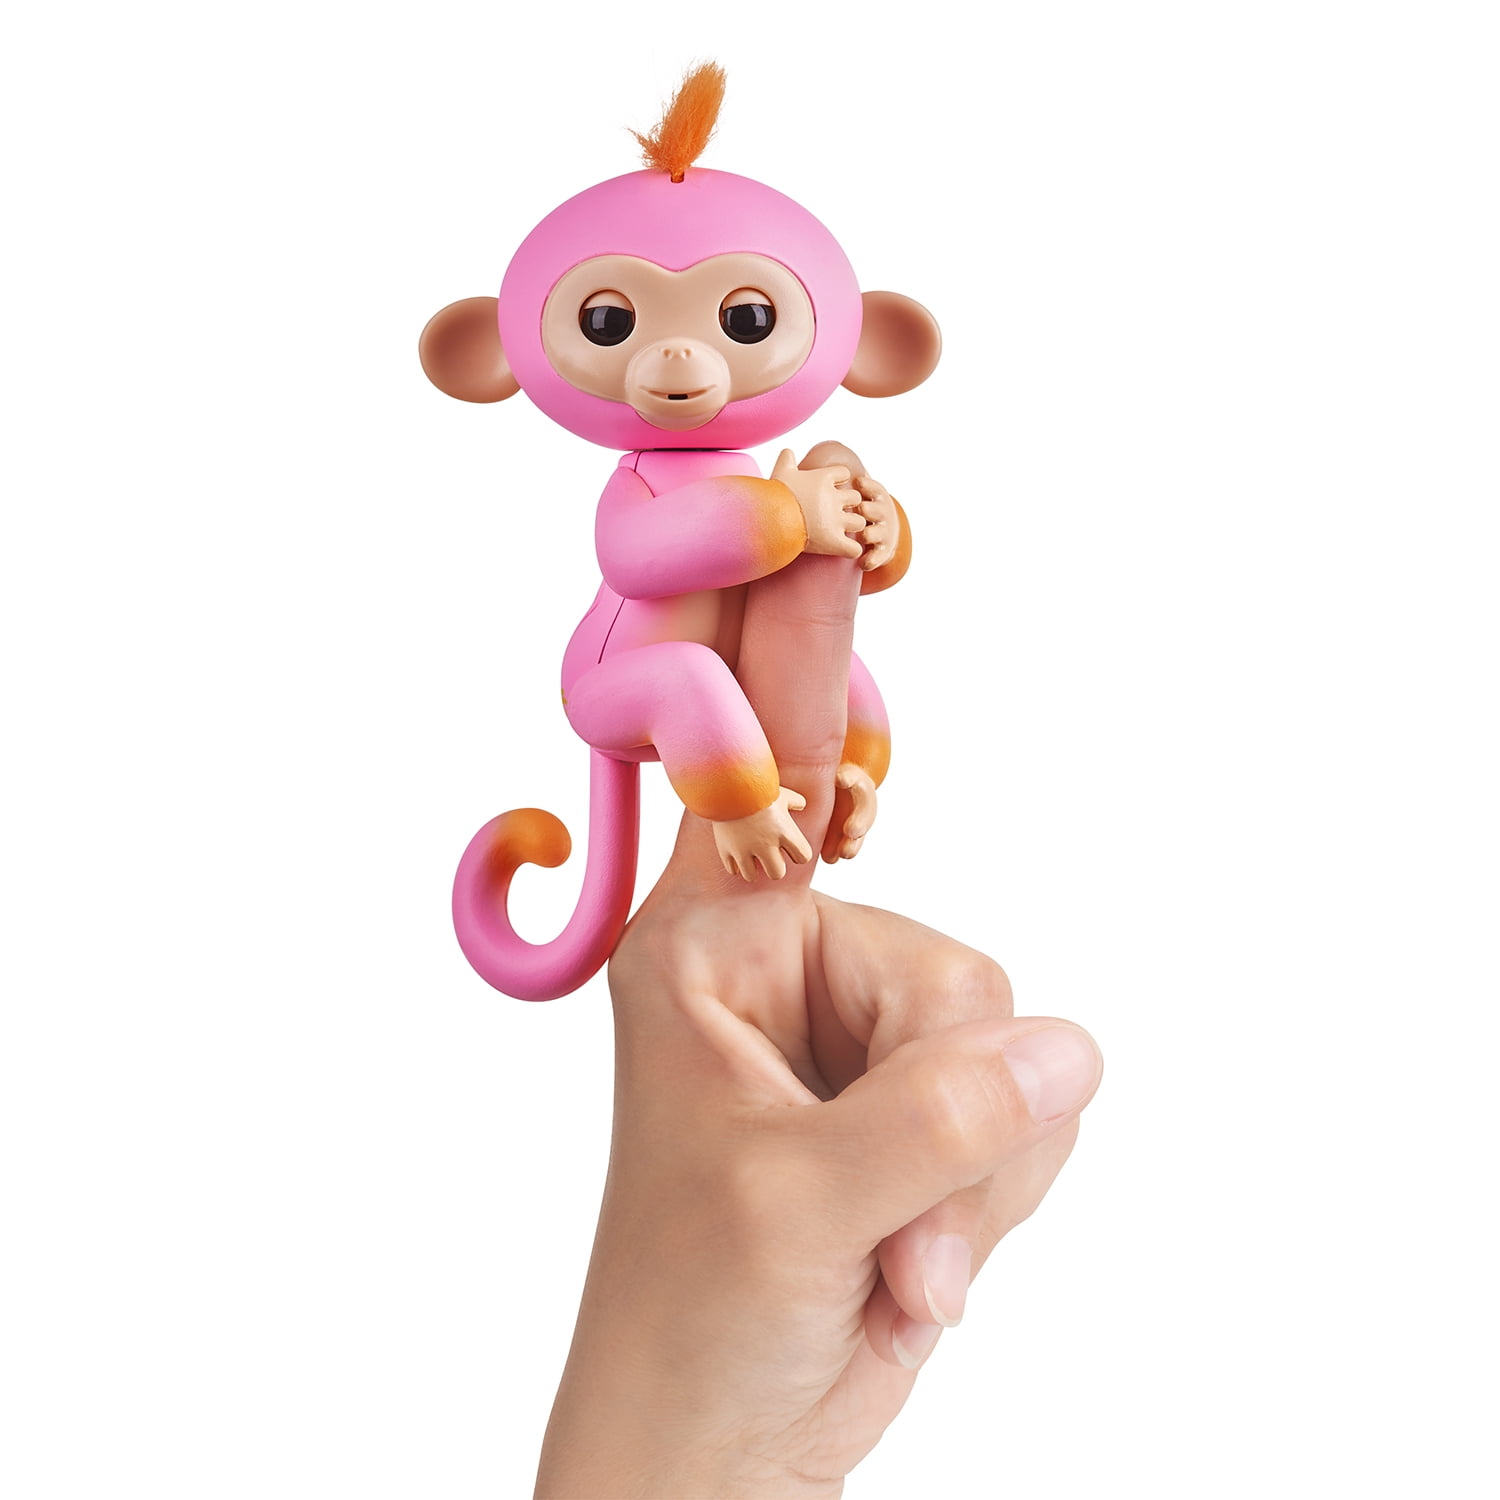 Fingerlings Glitter Monkey Interactive Baby Pet by WowWee Rose Pink Glitter Toy 